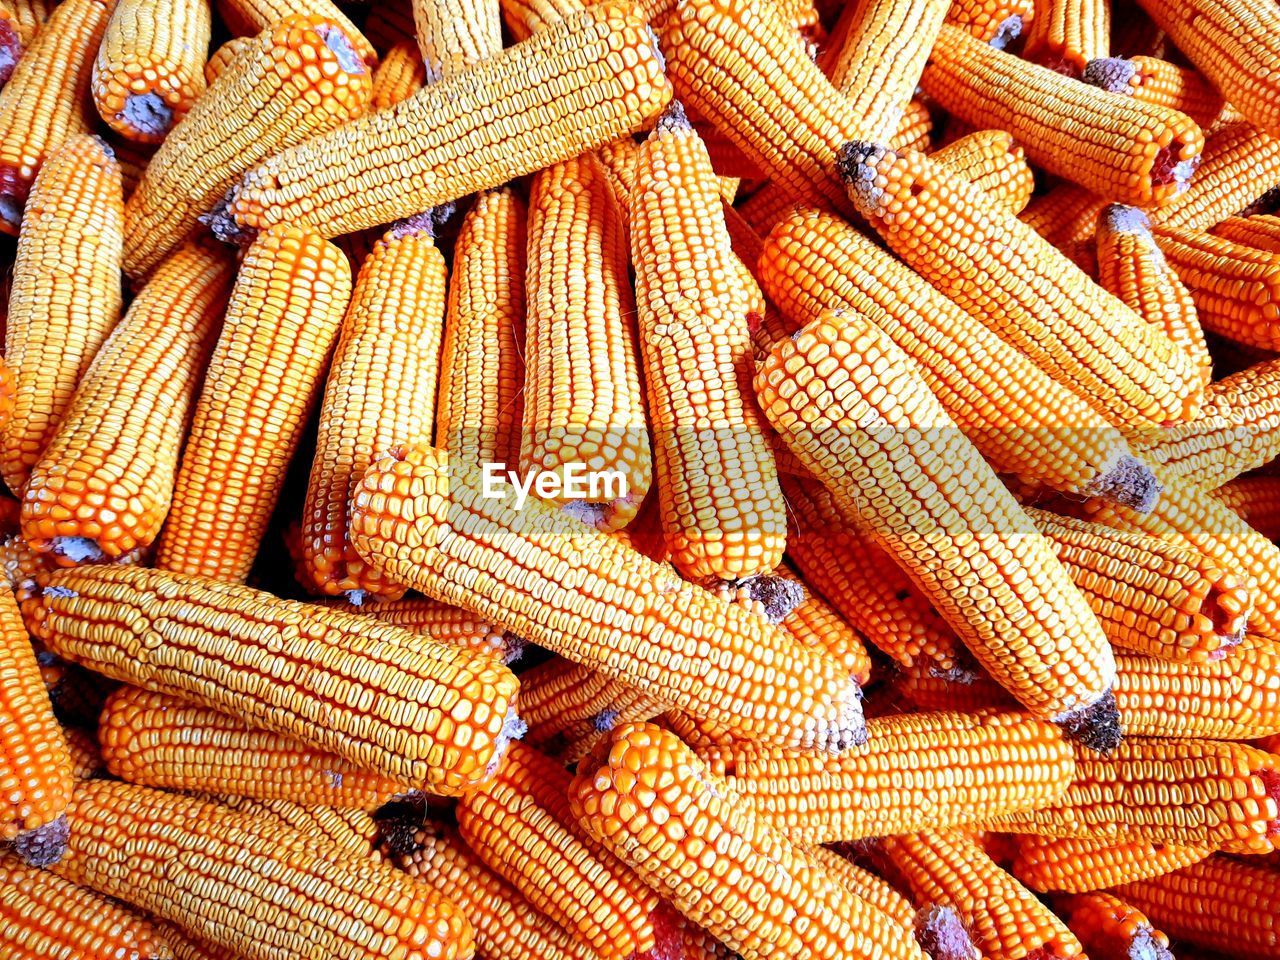 Full frame shot of healthy organic corn